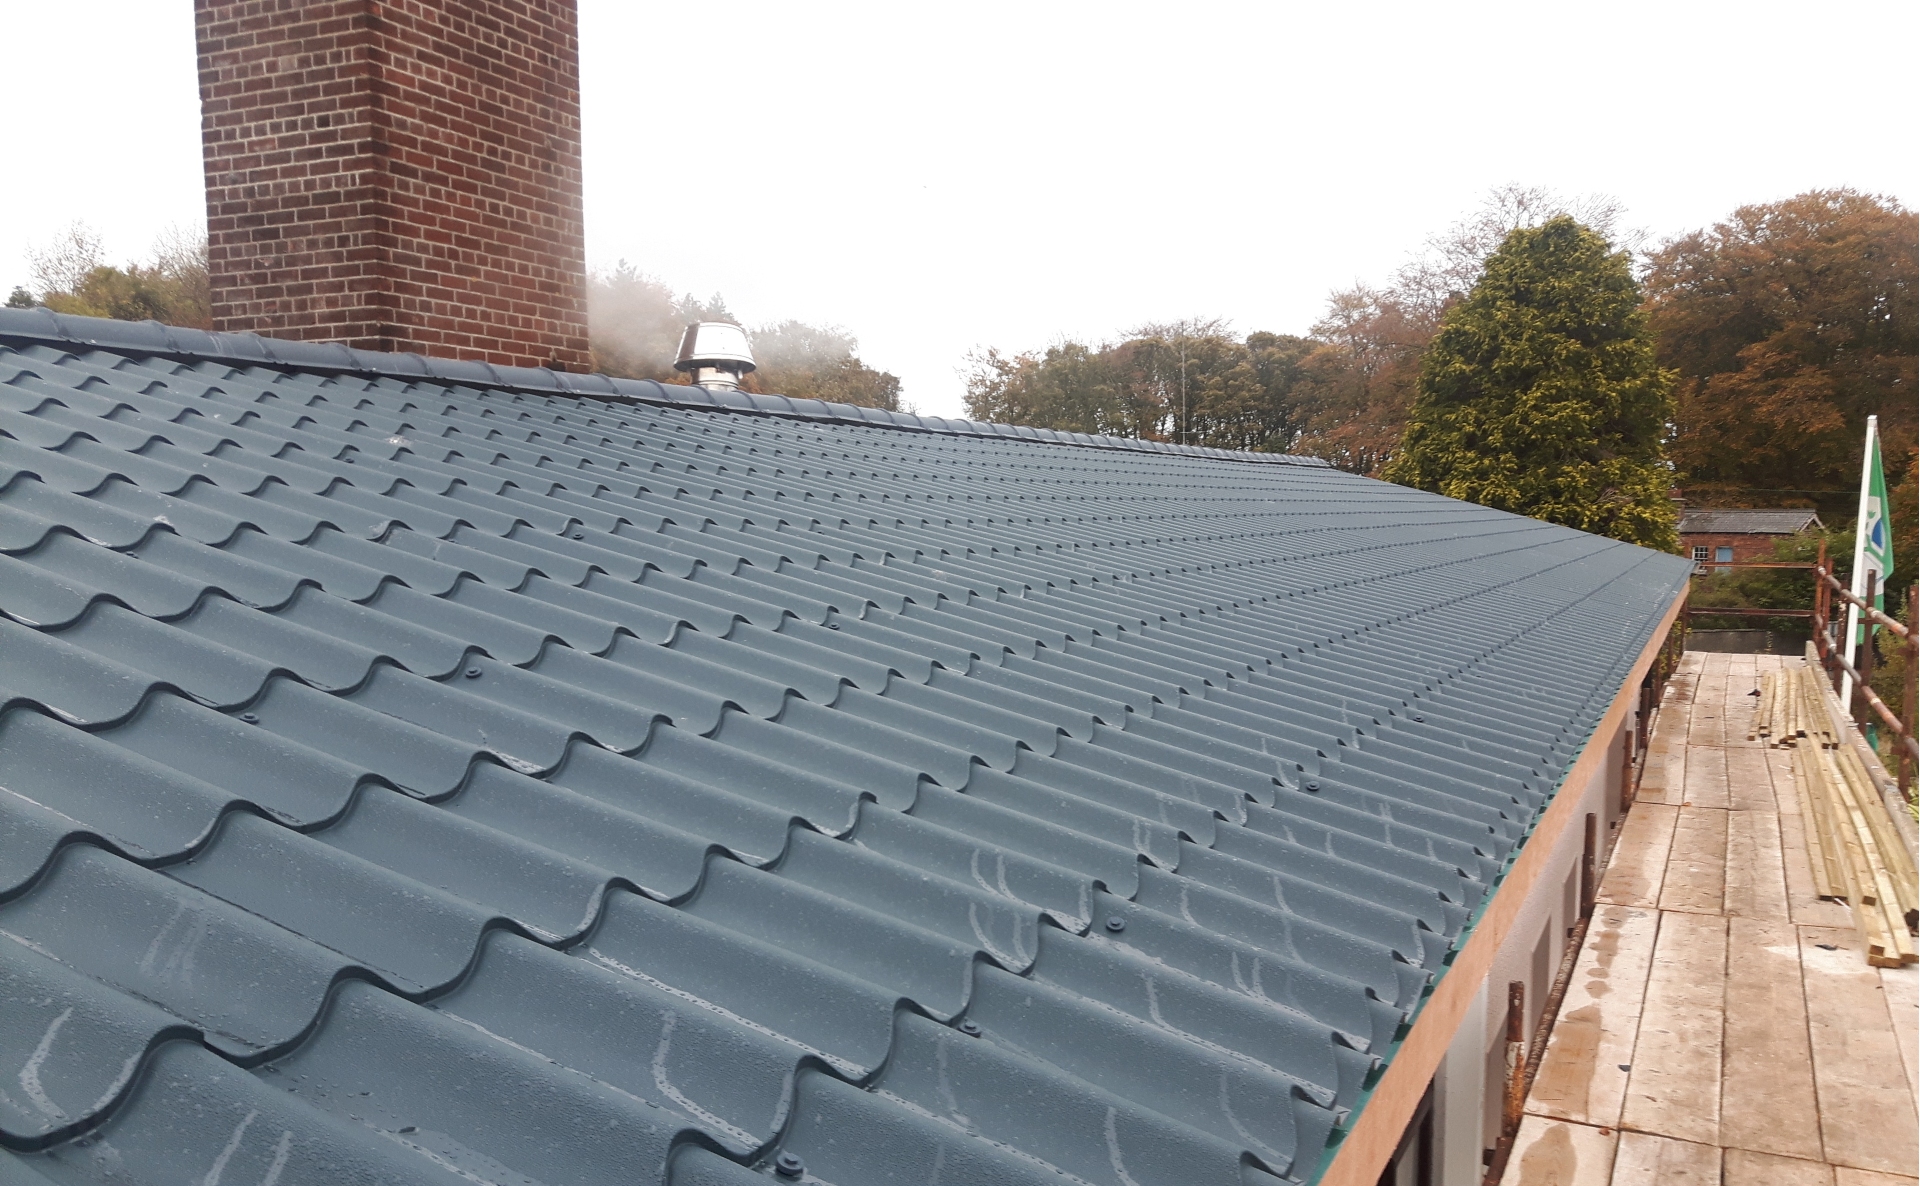 For an alternative roofing solution pick Nordman Tilesheet, the steel roofing tiles